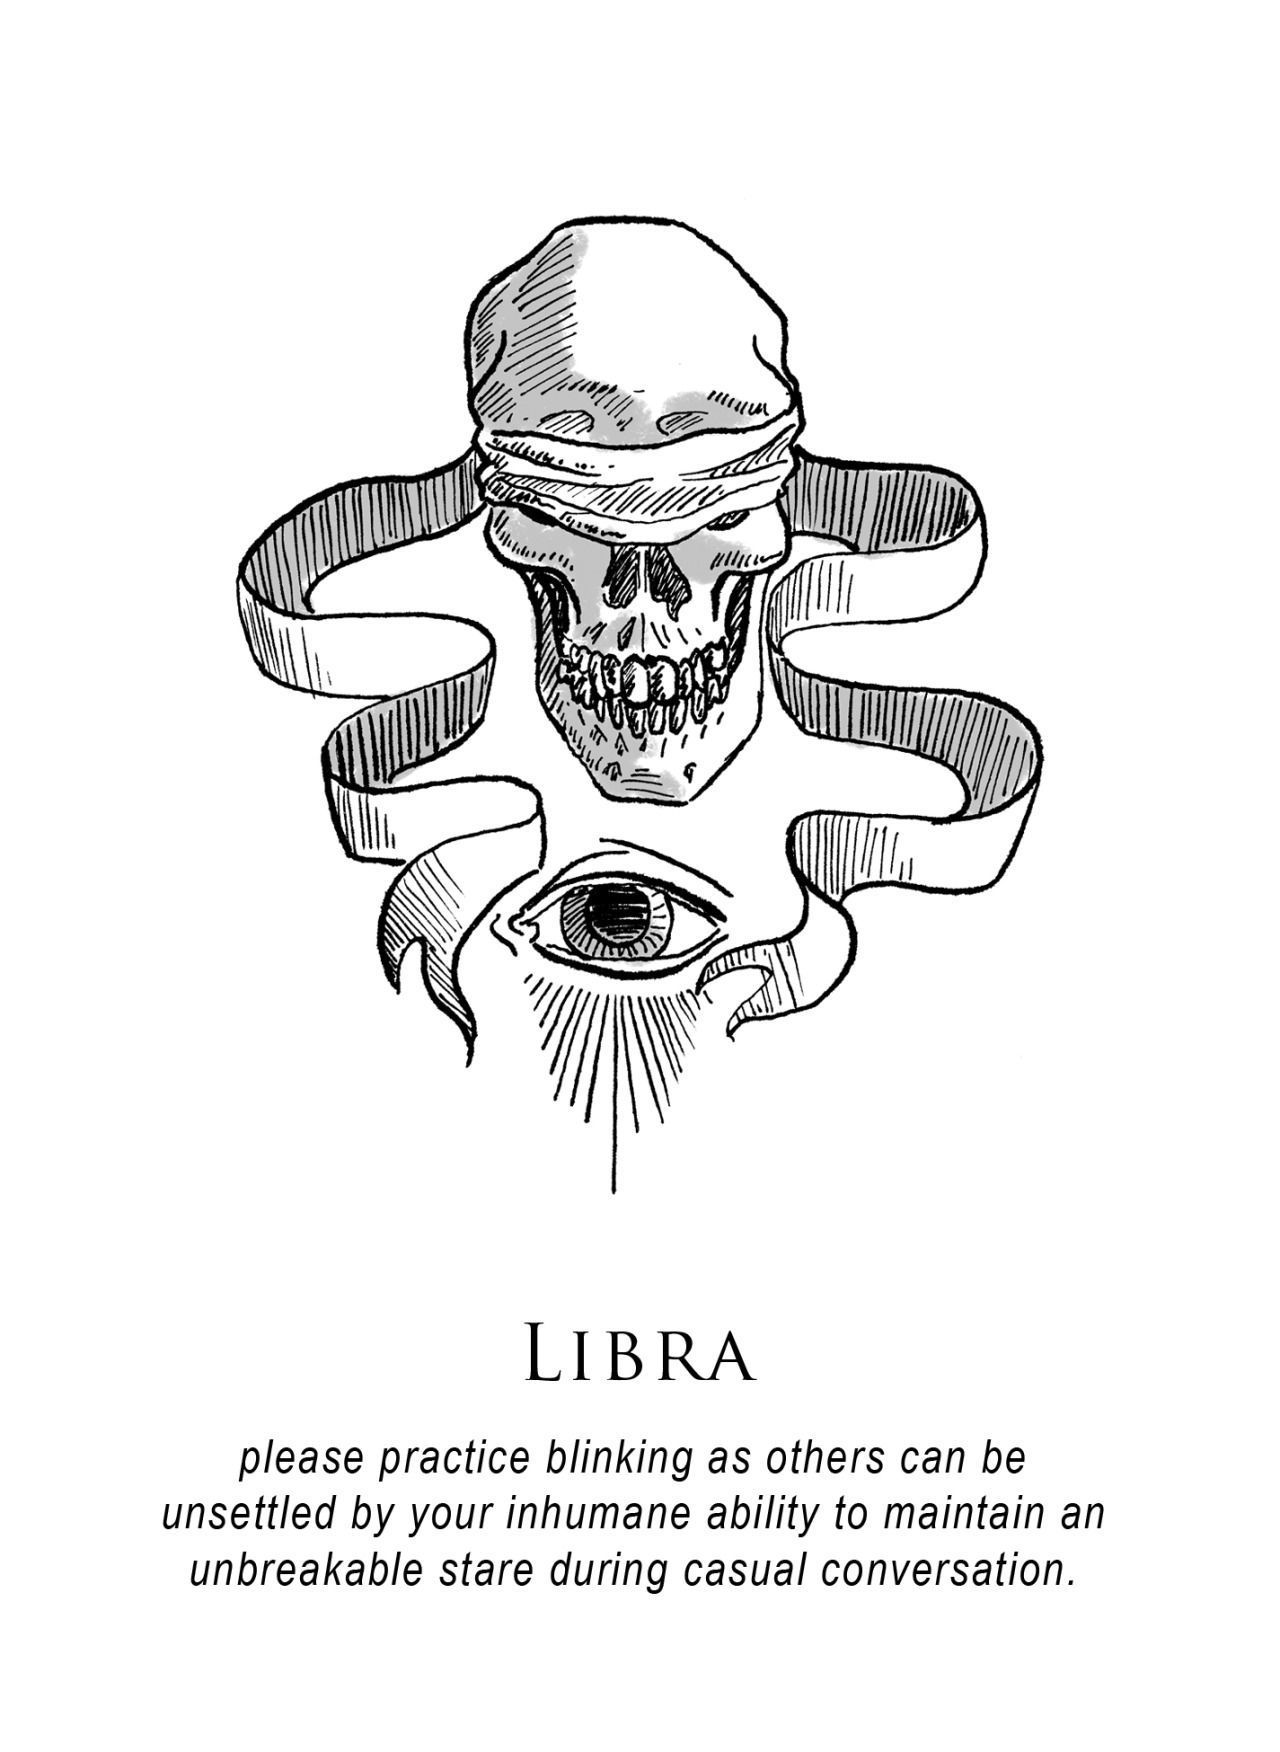 A drawing of the zodiac sign libra - Libra